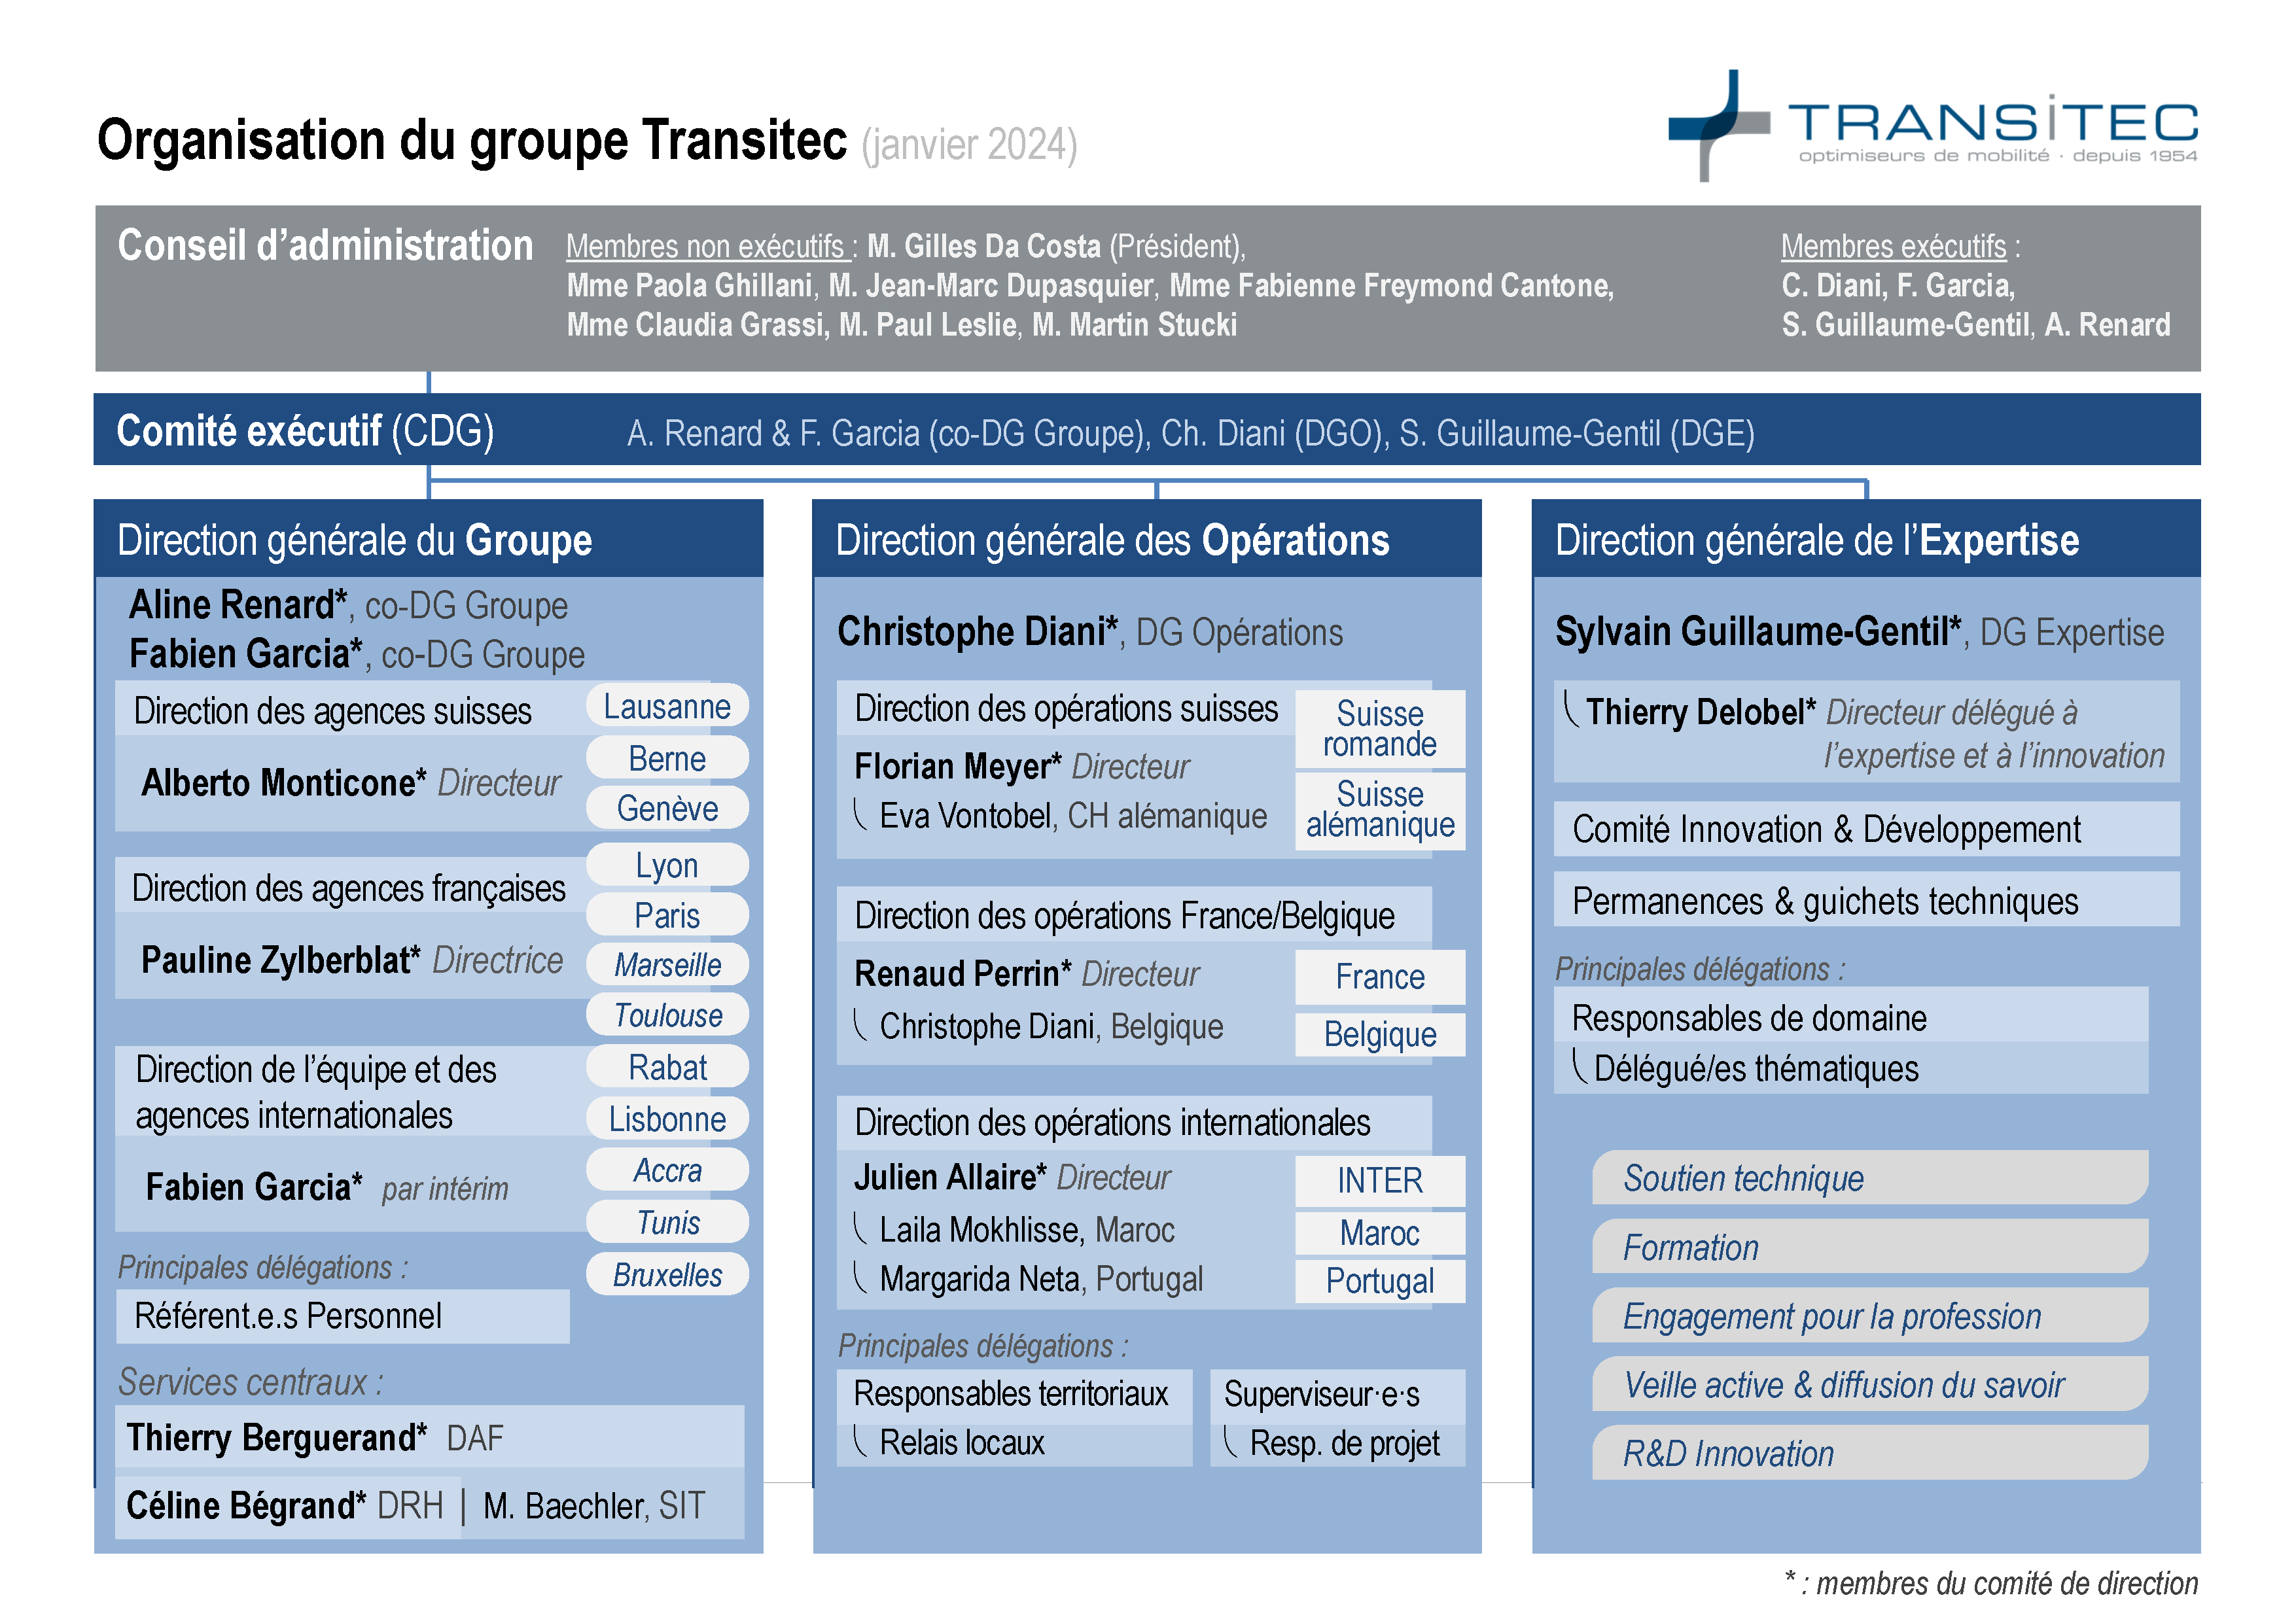 A0 5 Organigramme Transitec 2024 01 FR